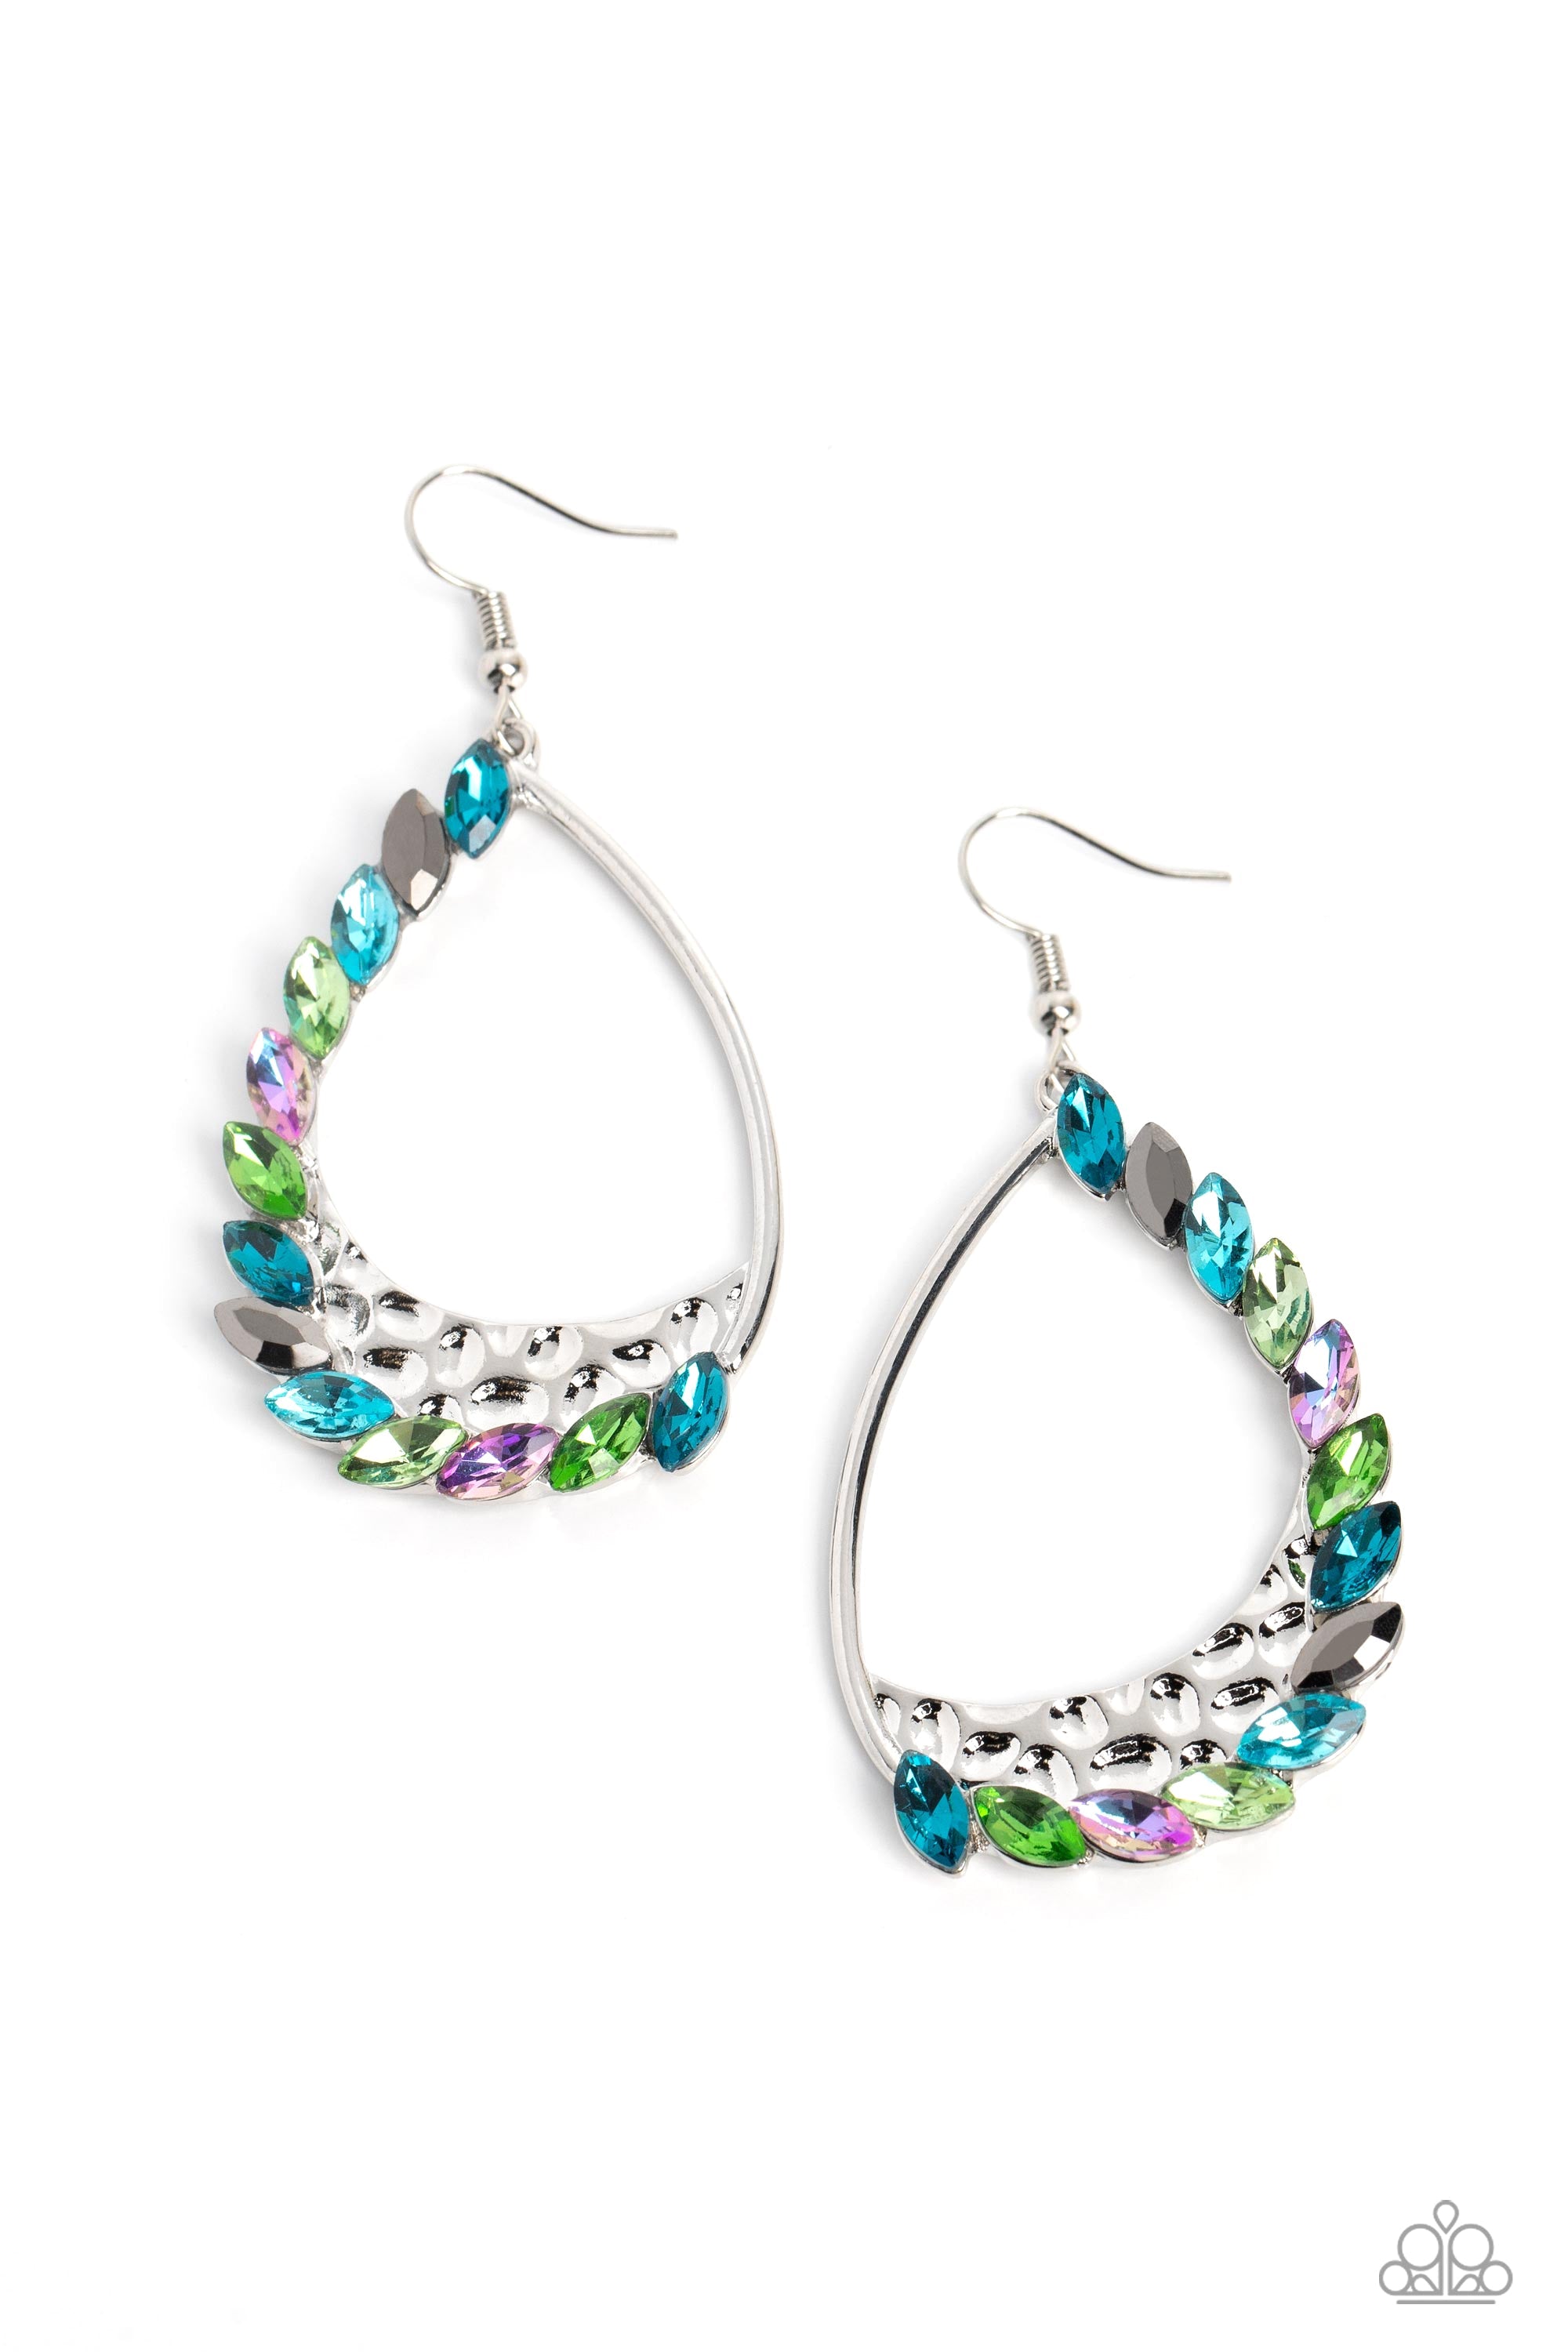 Looking Sharp Multi Rhinestone Earrings - Paparazzi Accessories- lightbox - CarasShop.com - $5 Jewelry by Cara Jewels